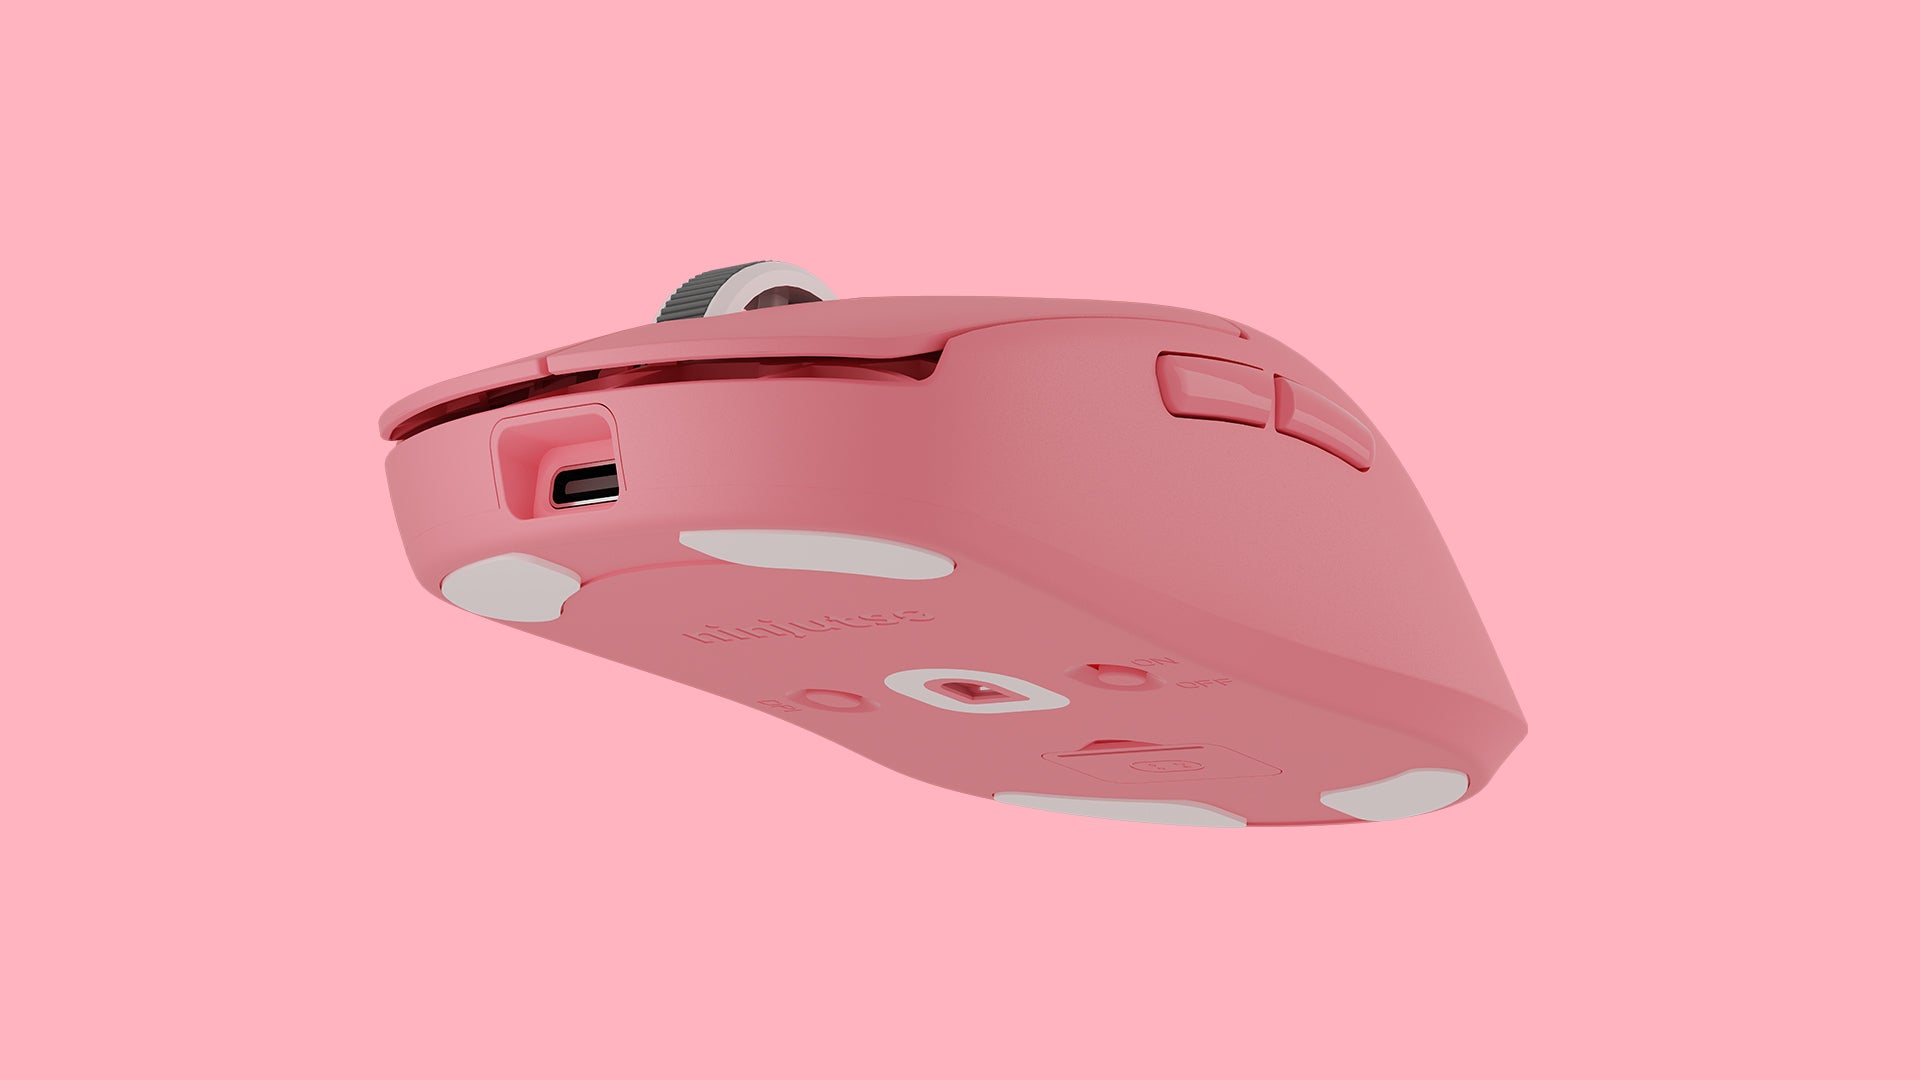 Ninjutso Sora Wireless Gaming Mouse